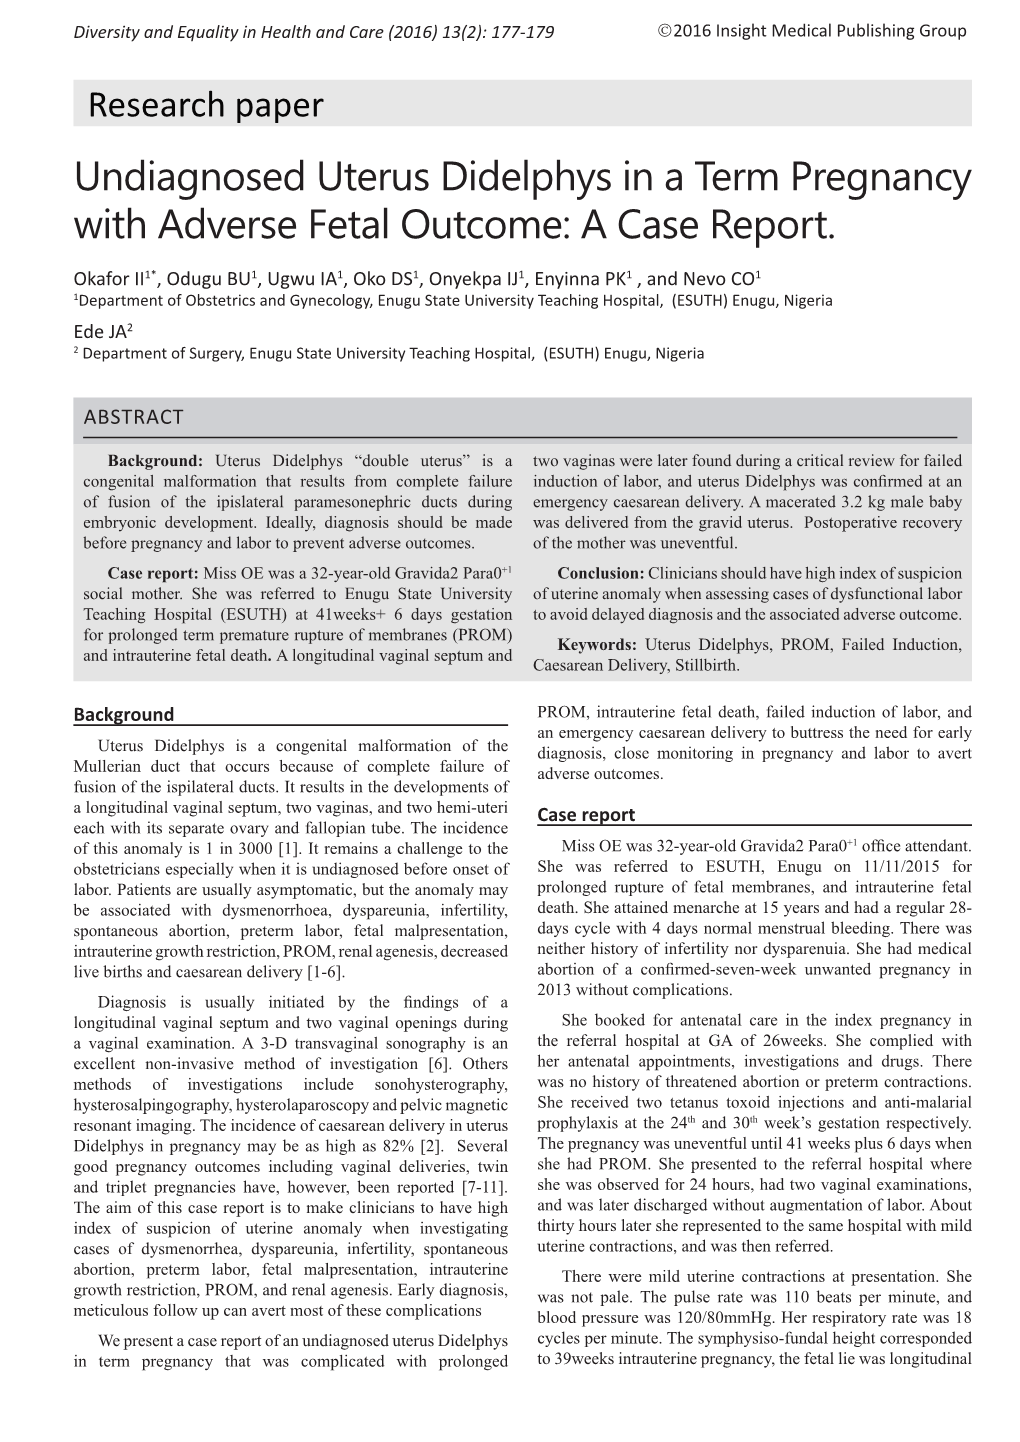 Undiagnosed Uterus Didelphys in a Term Pregnancy with Adverse Fetal Outcome: a Case Report